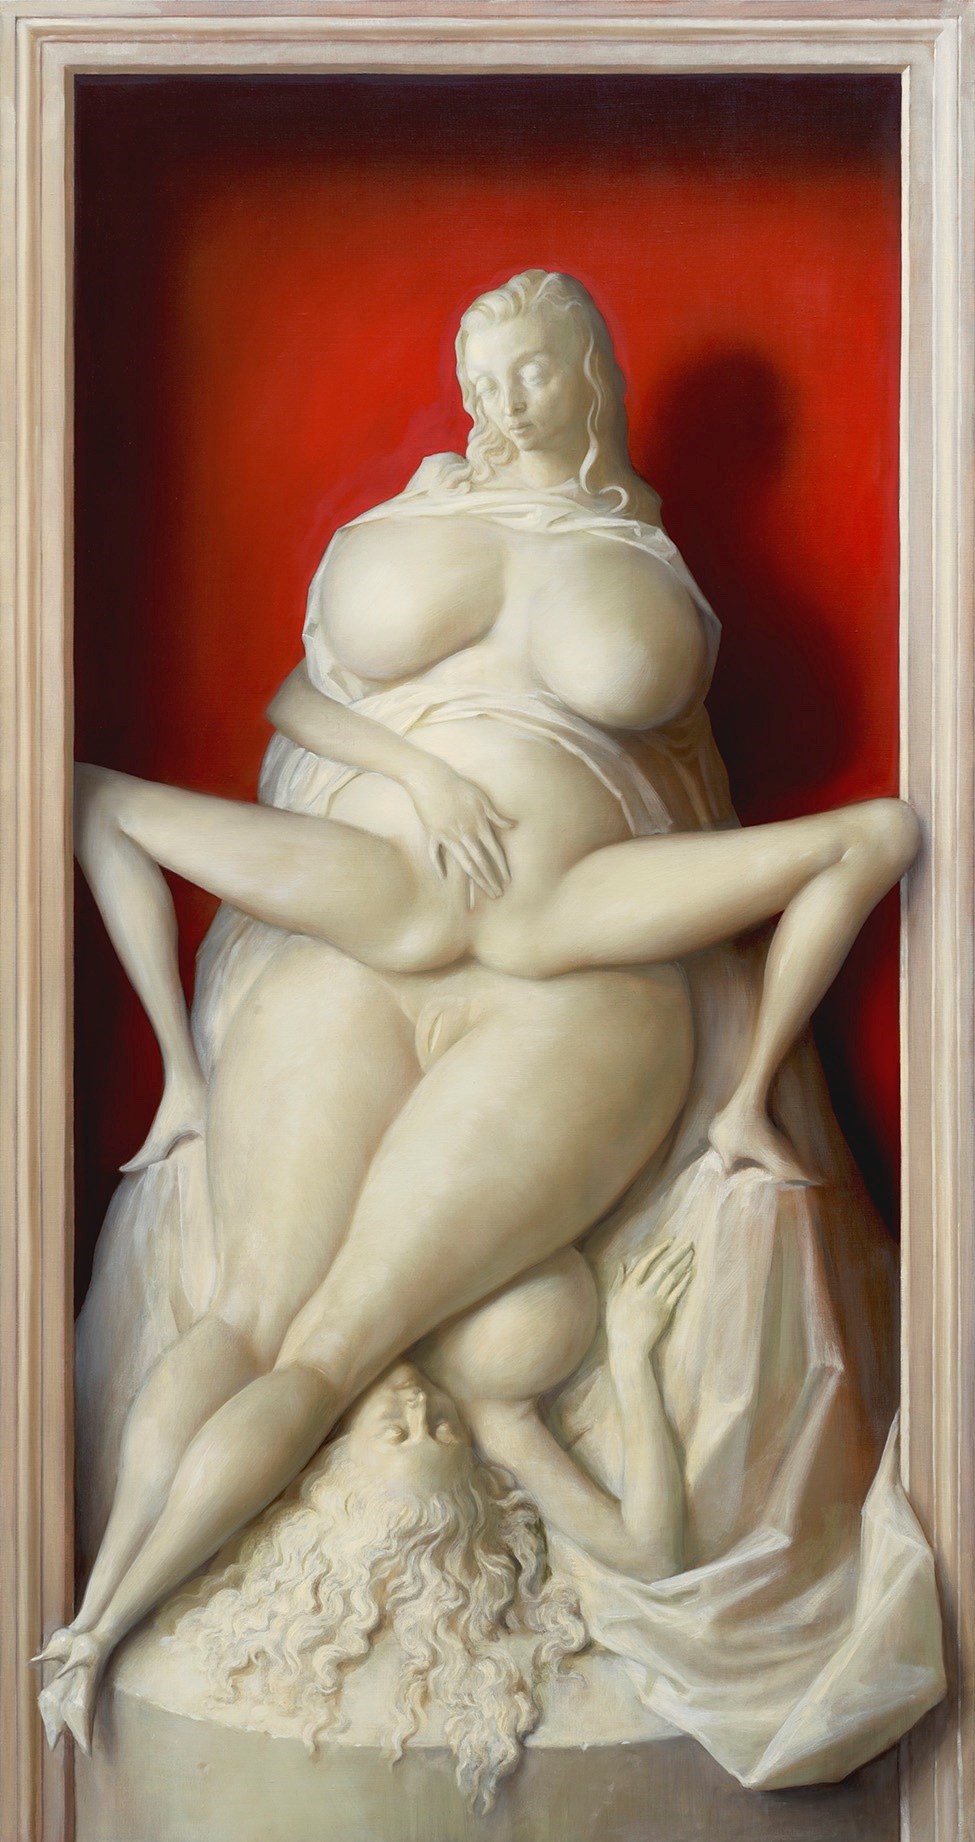 Art Pron Download - John Currin captures the desolate mood of porn as classical art | Dazed